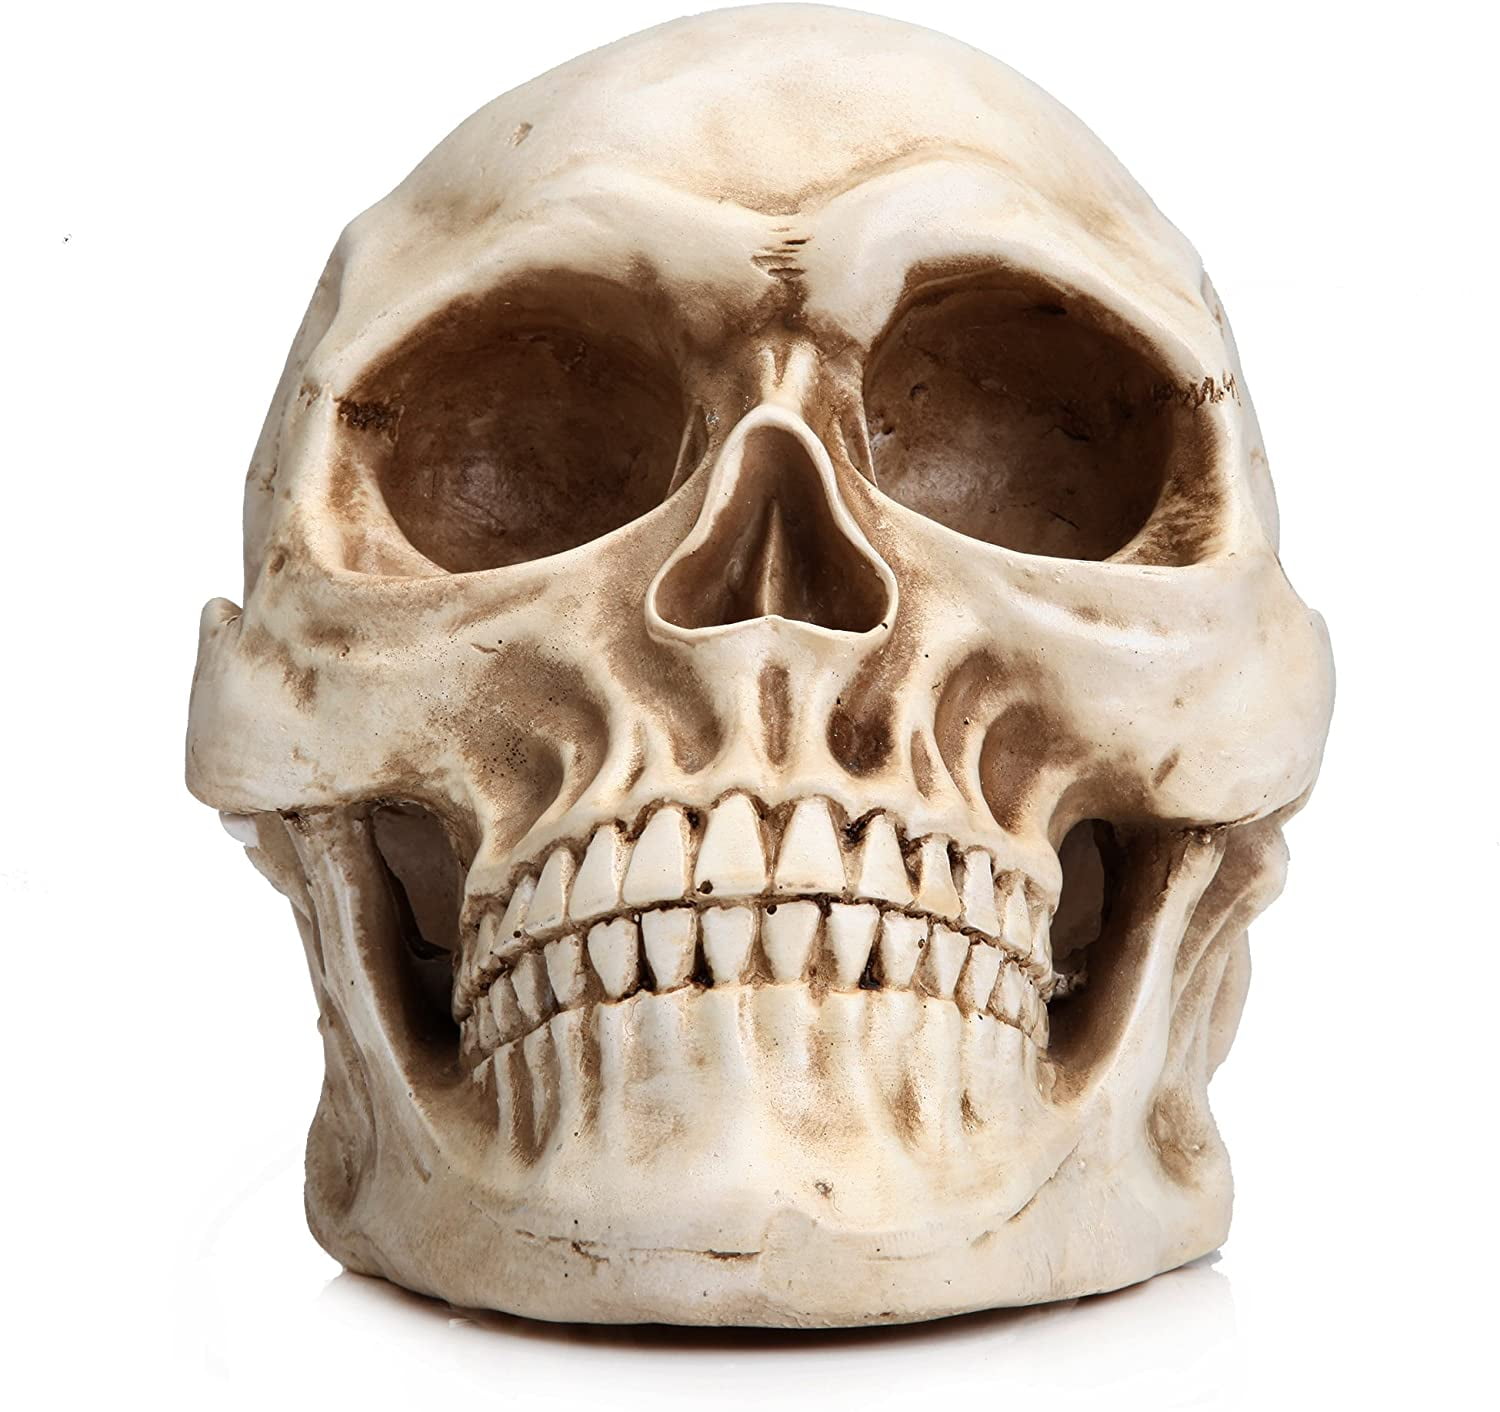 MagiDealResin Lifesize 1:1 Human Skull Replica Model Anatomical Skeleton Home 